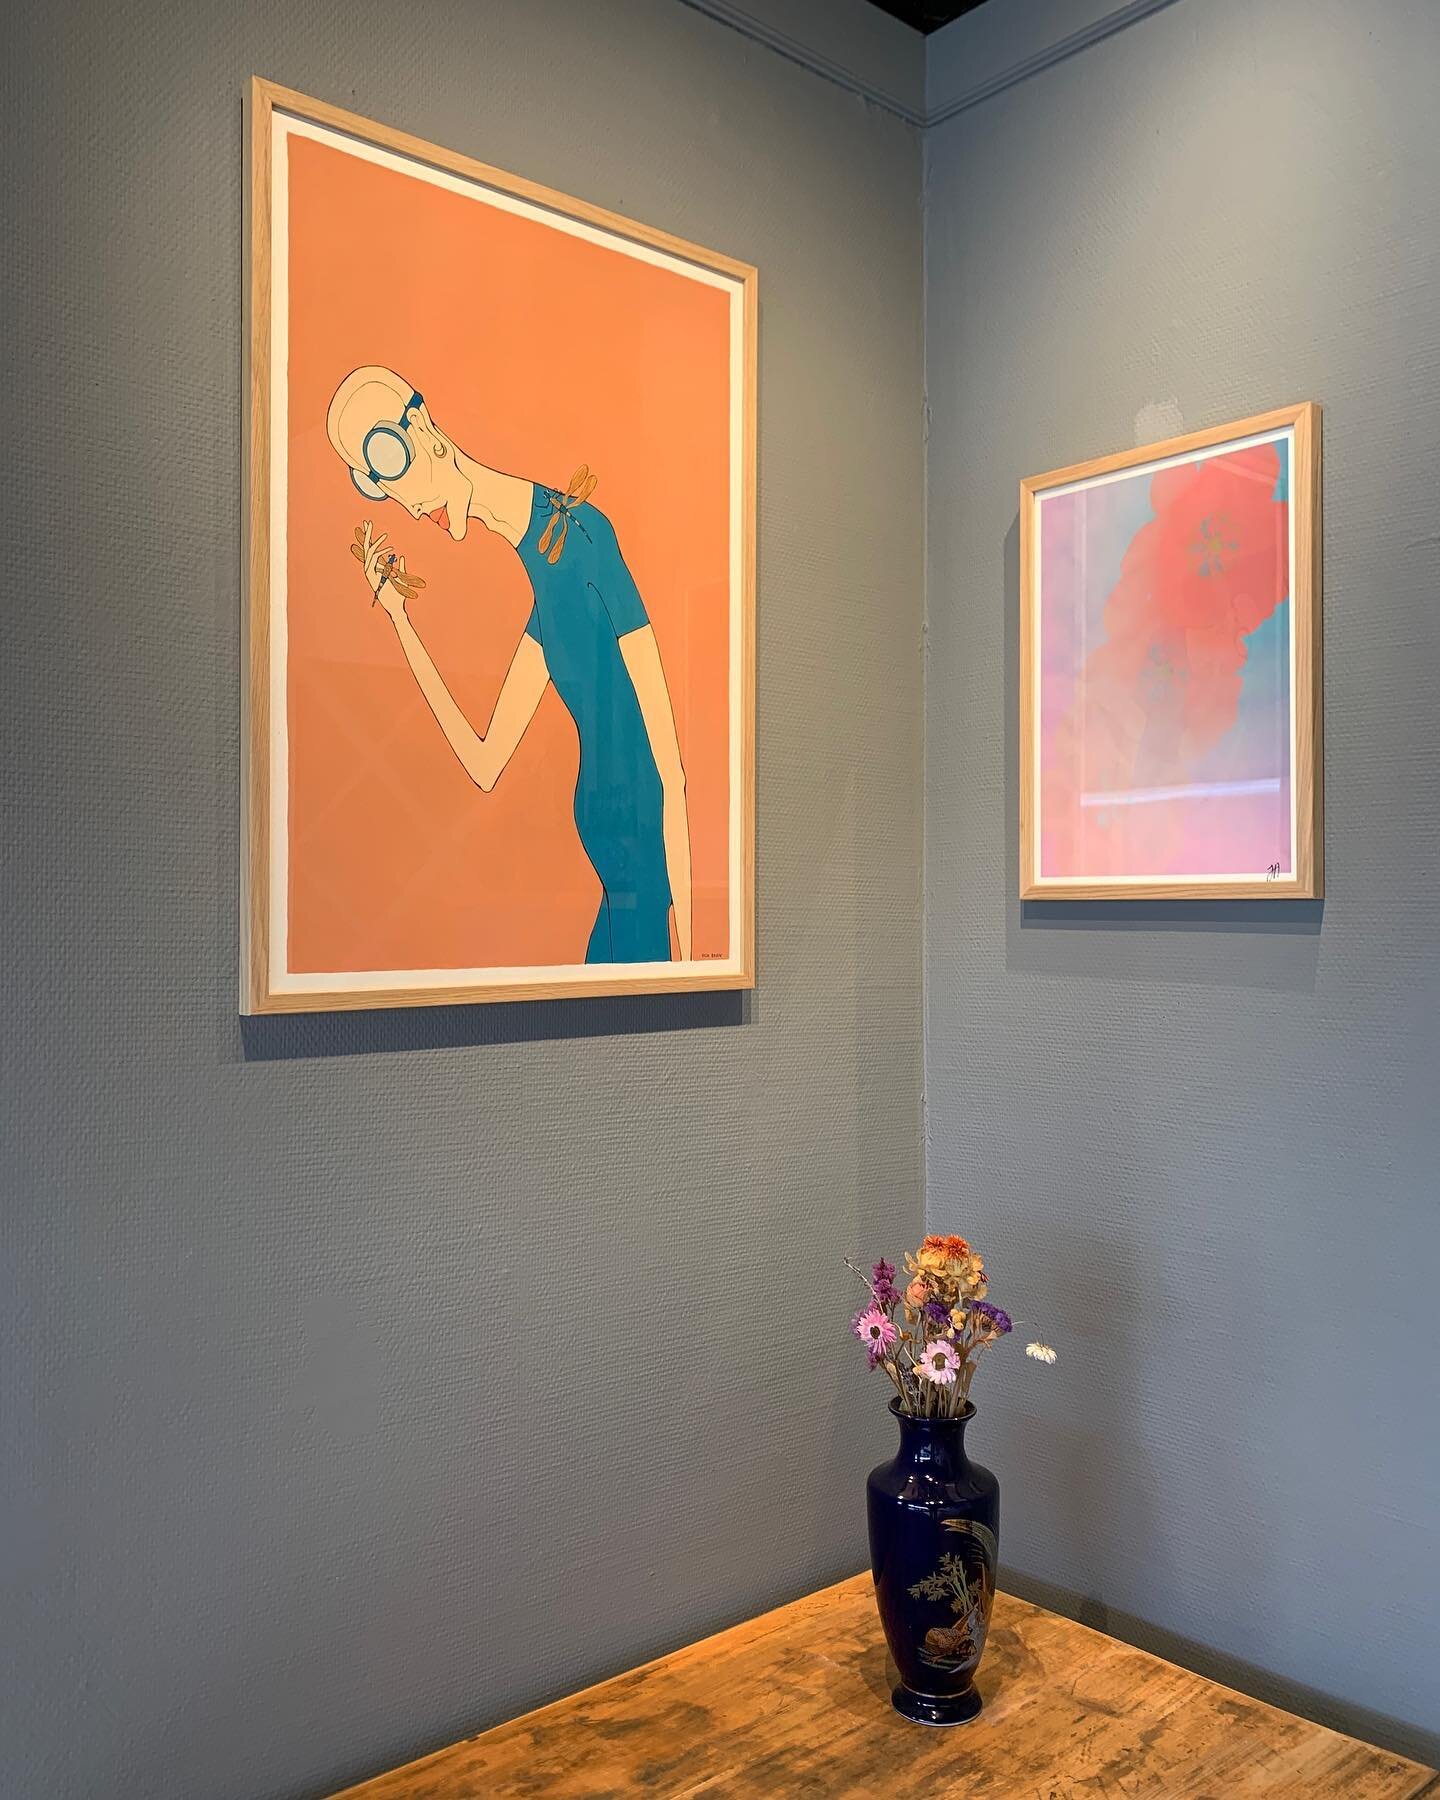 Tulipaner &amp; Guldsmede 

Guldsmed, Silje Bruun 

Akryl p&aring; 300 gr akvarel papir 
Str. 50 * 70 

@siljebruun_art 

Tulipaner, Jens Anker 

Blomstertryk p&aring; 320 gr mat papir 
Str. A3 (29,7*42) 

@jenshalvfems 

#kunst #modernekunst #art #c